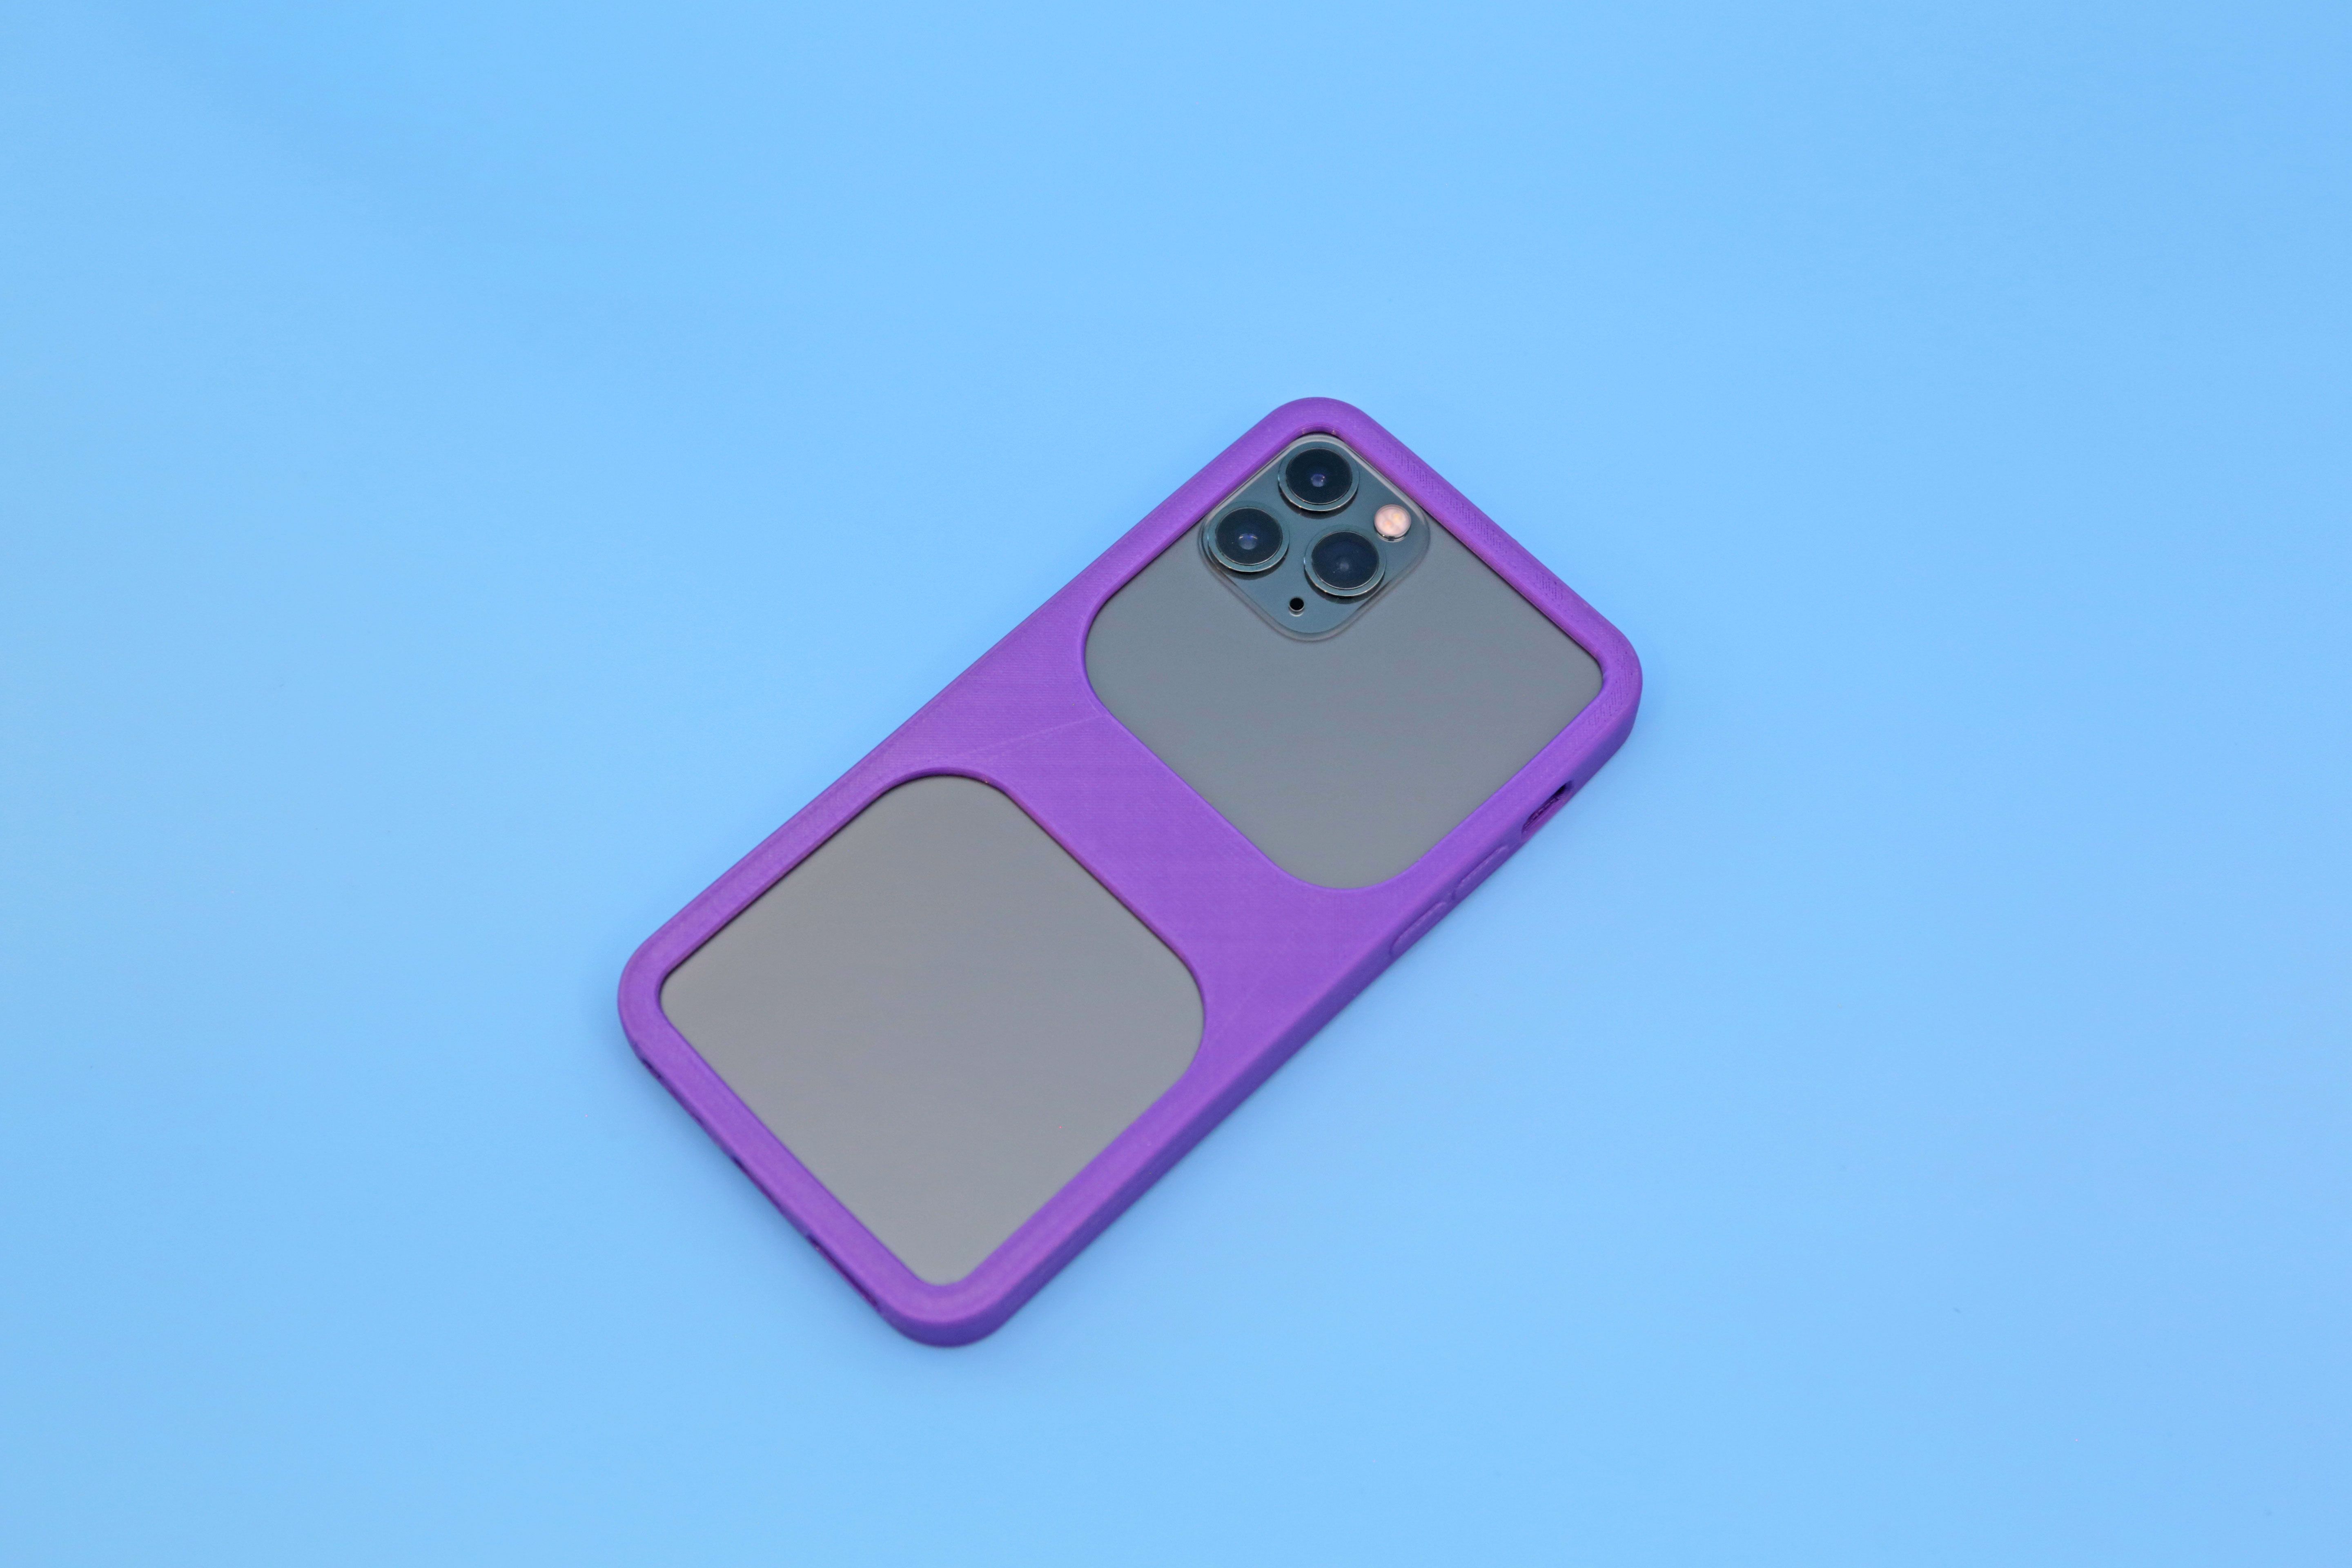 iphone11pro-hero.jpg Free STL file iPhone 11 Pro Bumper Case・Design to download and 3D print, Adafruit